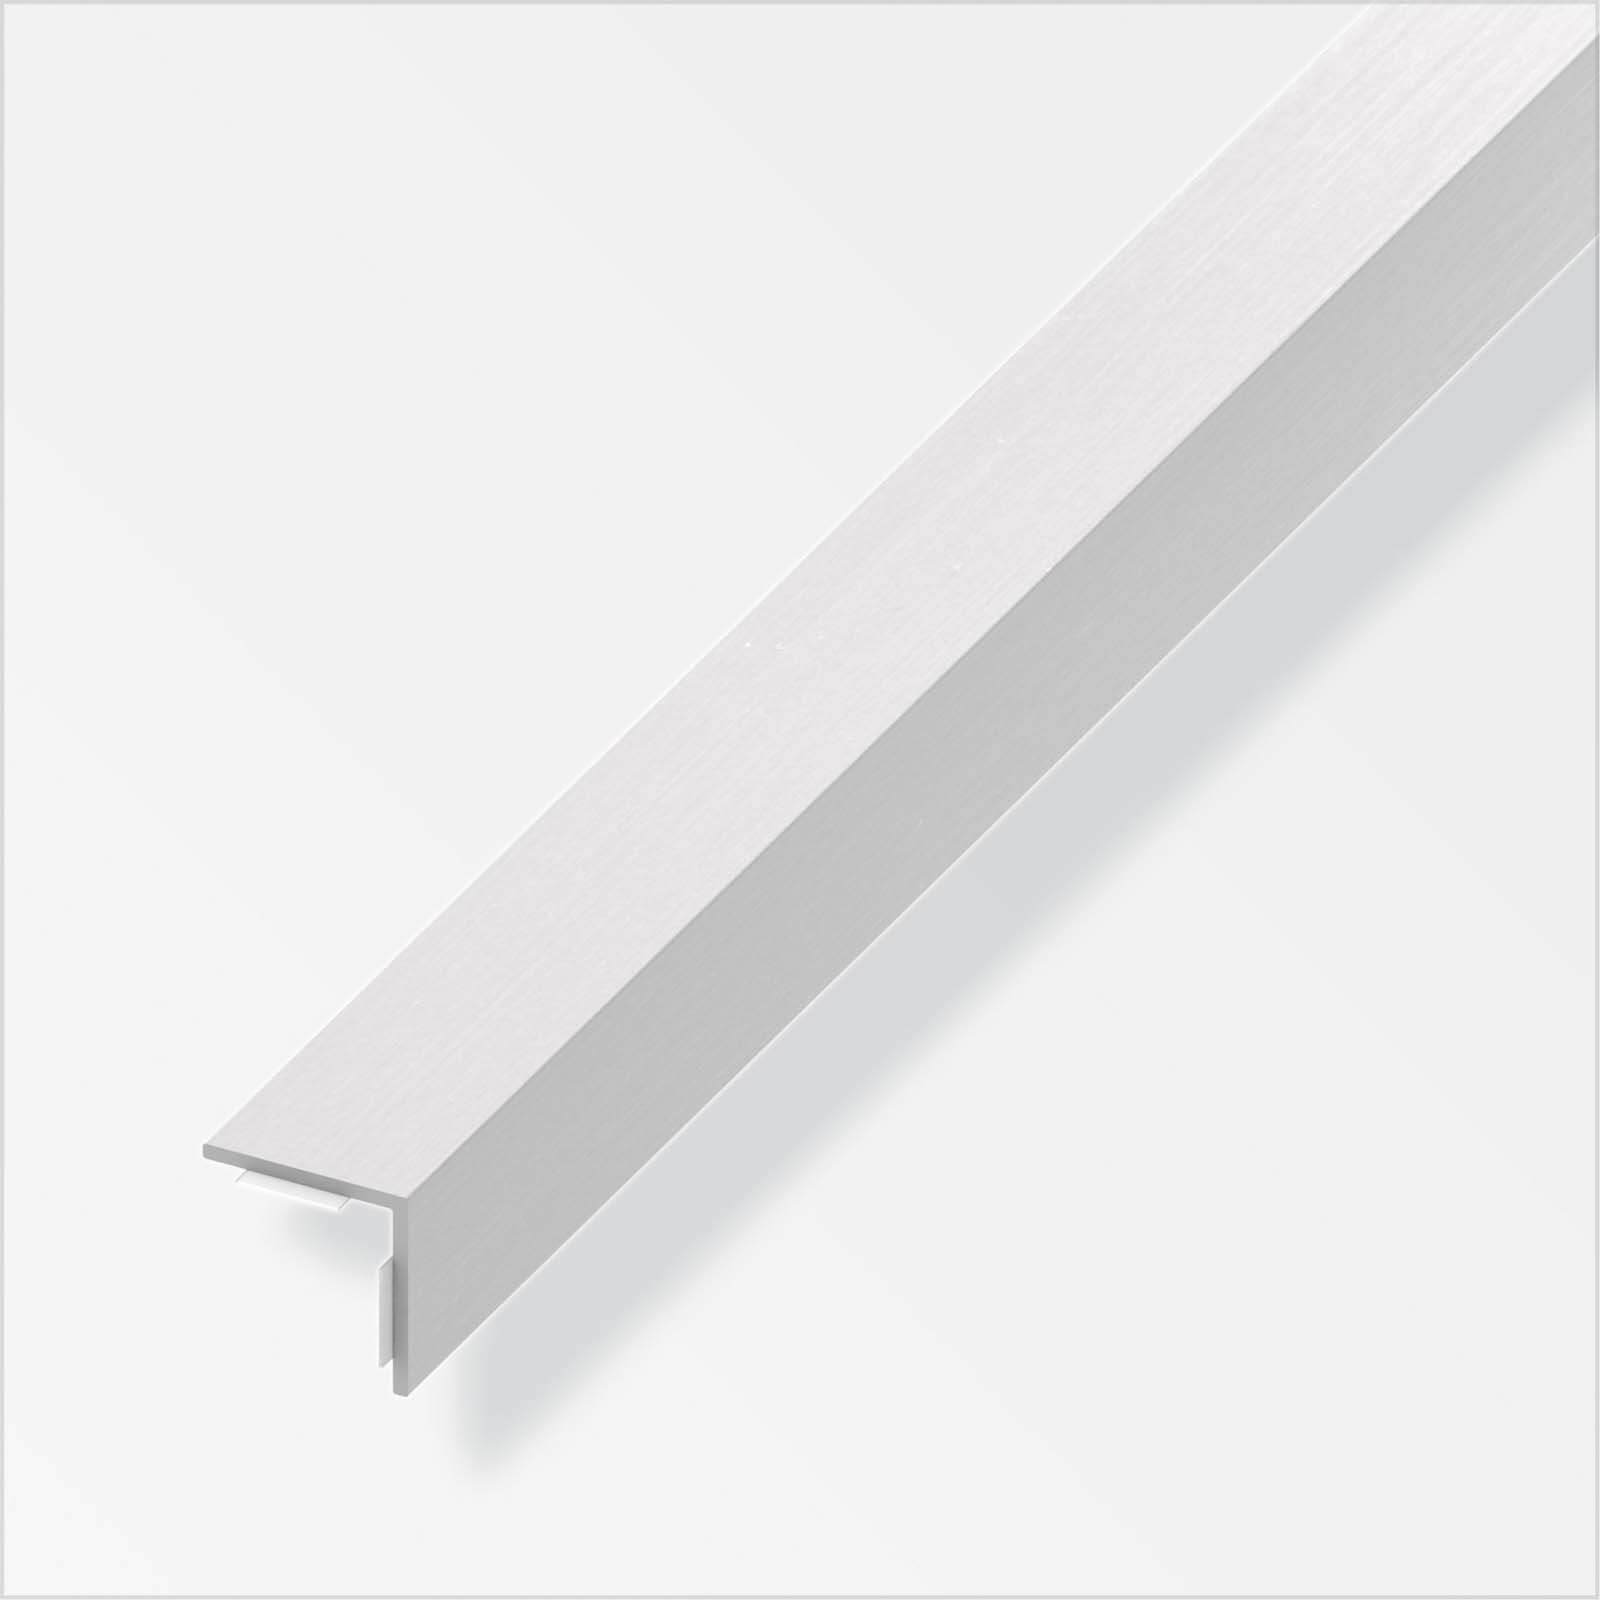 Photo of Pvc Equal Angle Self-adhesive Profile - Brushed Aluminium - 1m X 20 X 20mm